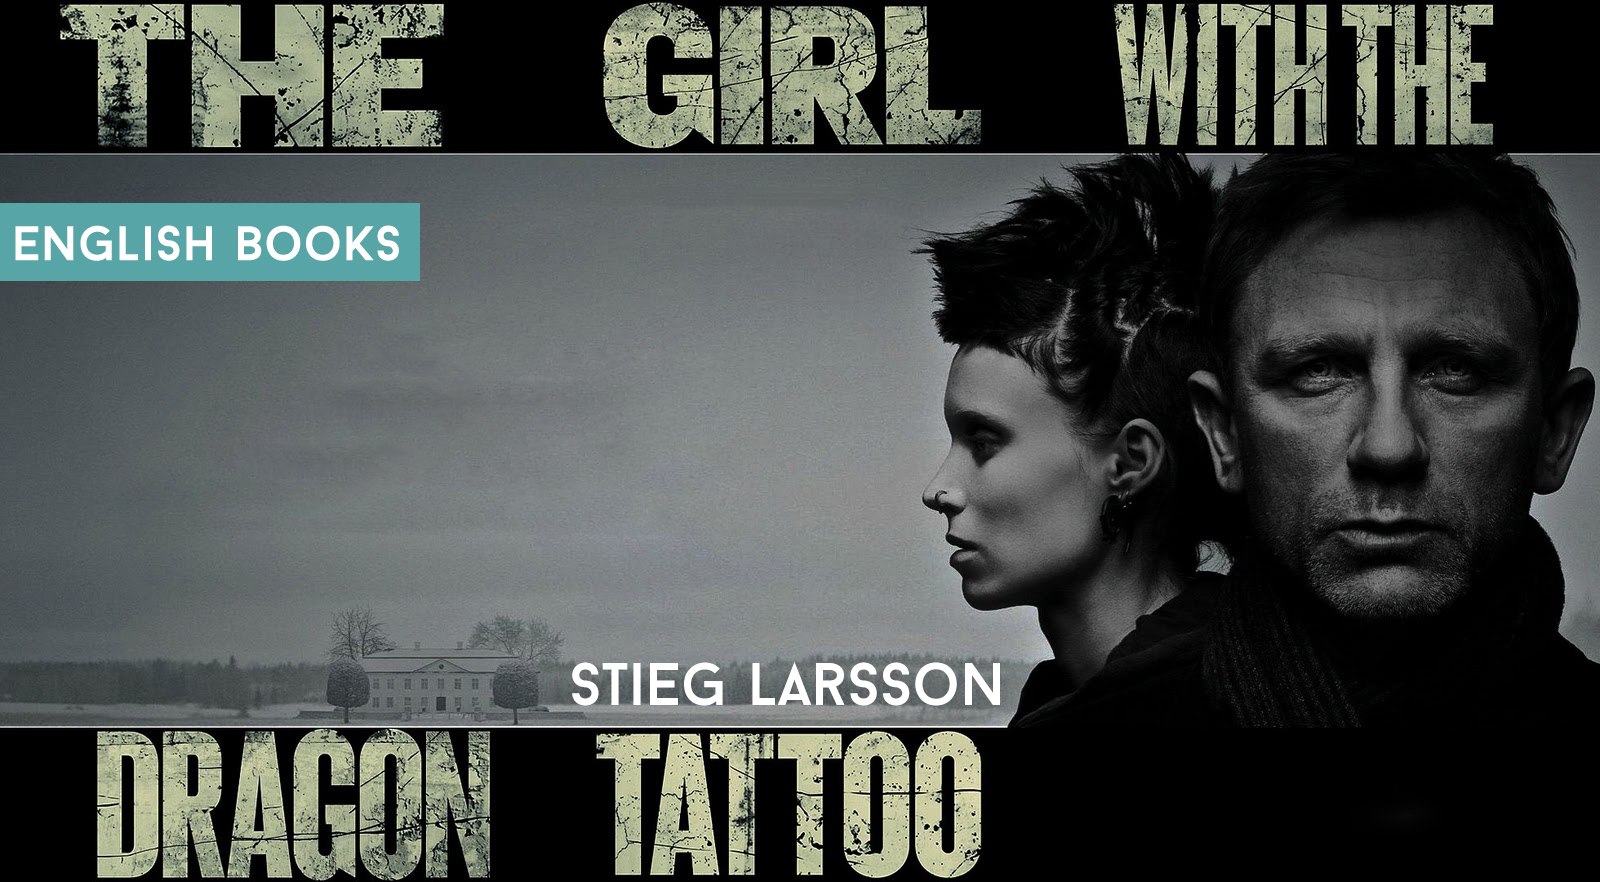 Stieg Larsson — Girl With The Dragon Tattoo